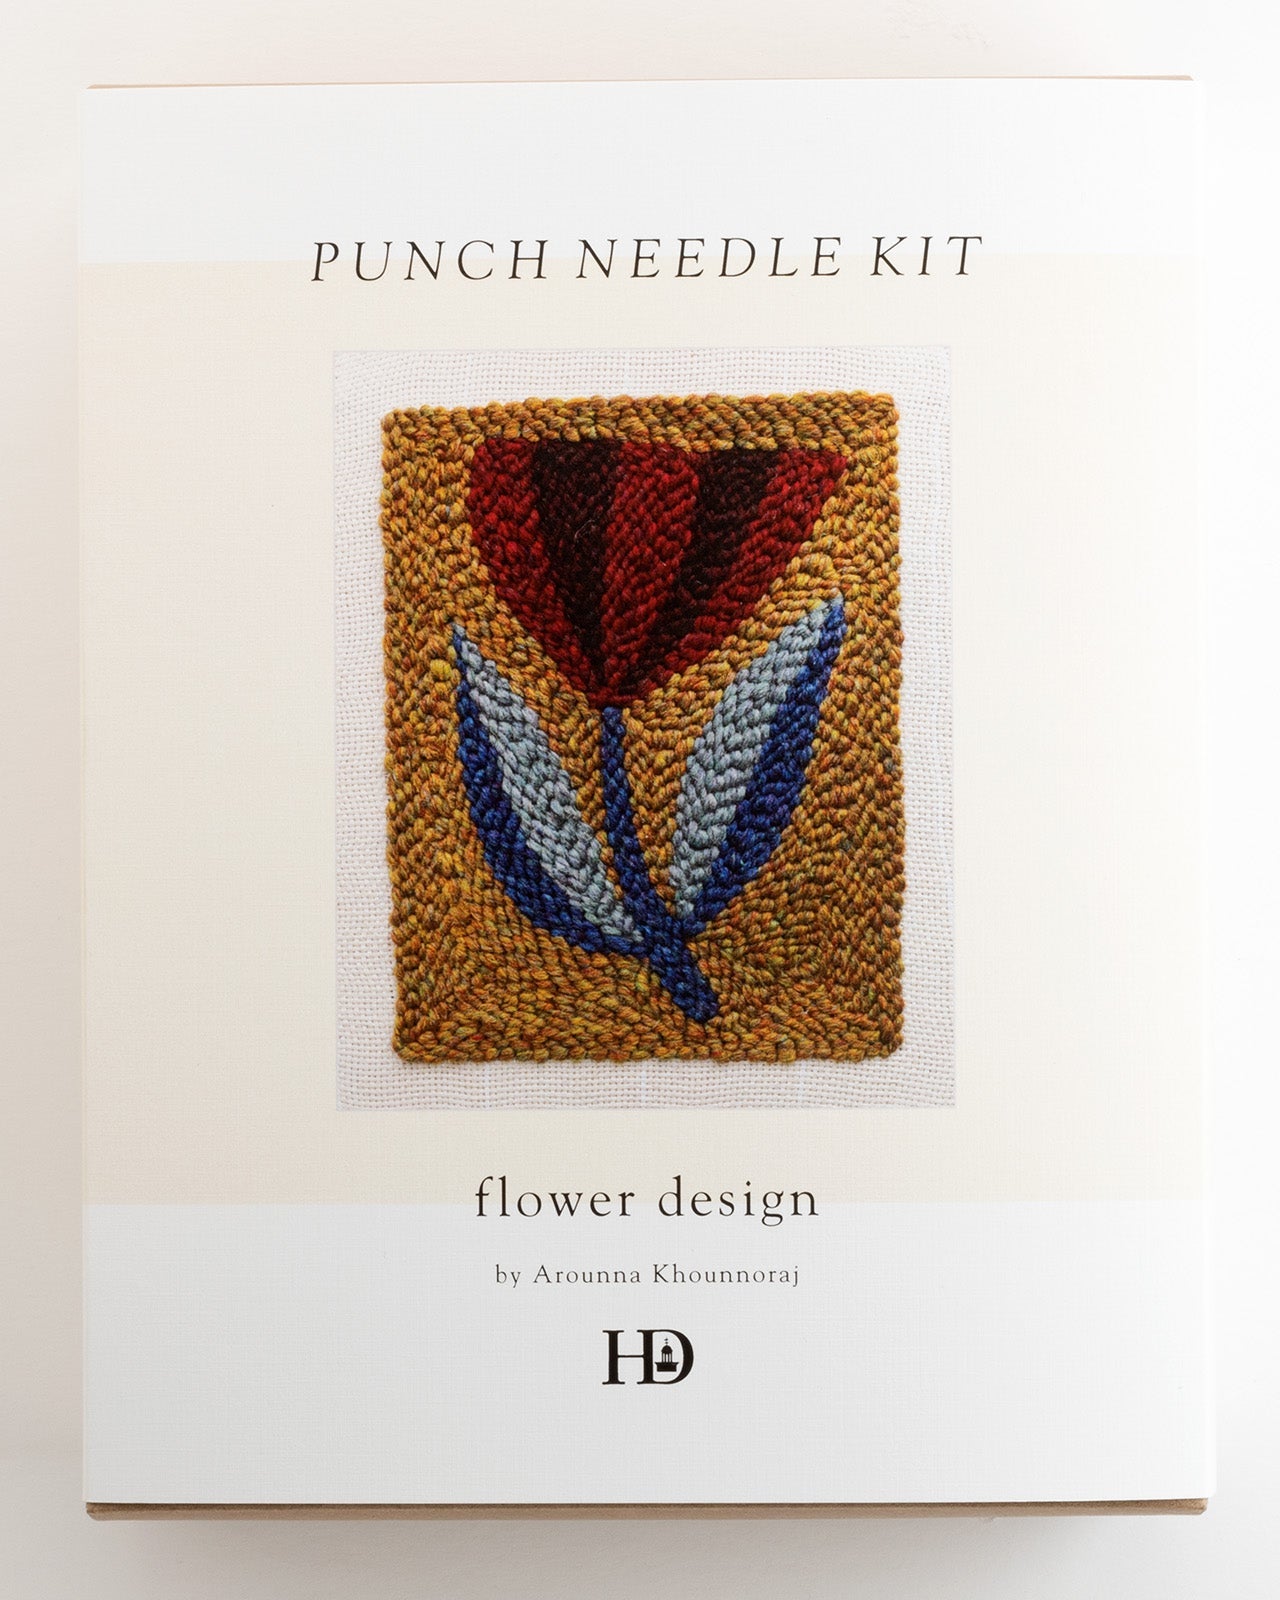 Punch needle kit - from Kit Company